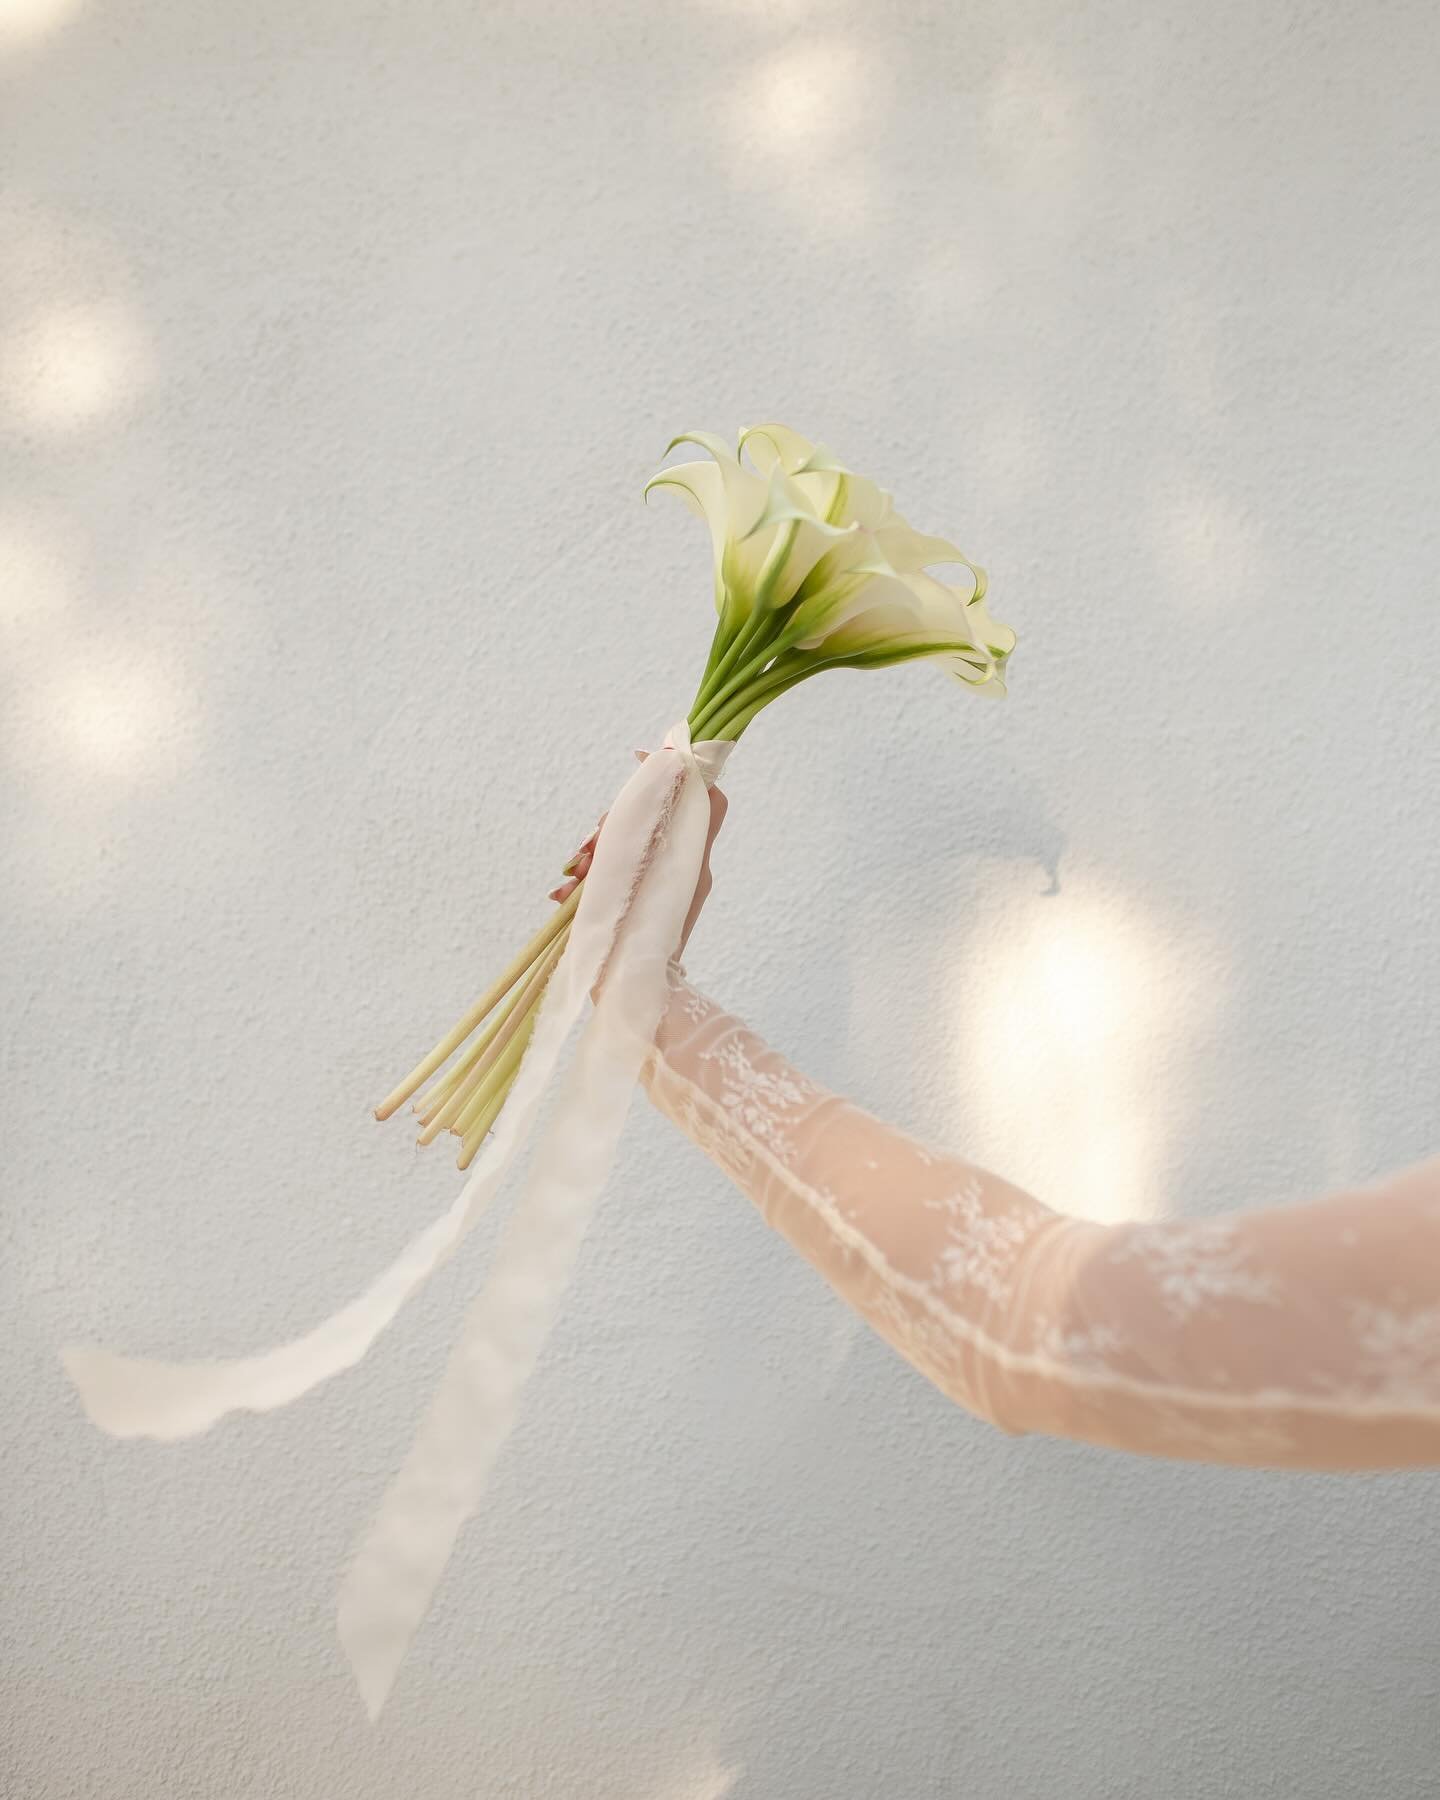 the beautiful Makayla + her calla lily bouquet 🕊️
.
.
.
.
.
.
.
.
#santabarbaraweddingphotographer #santabarbarawedding #santabarbaraweddingstyle #sanluisobispoweddingphotographer #sanluisobispowedding #californiaweddingphotographer #californiaweddi